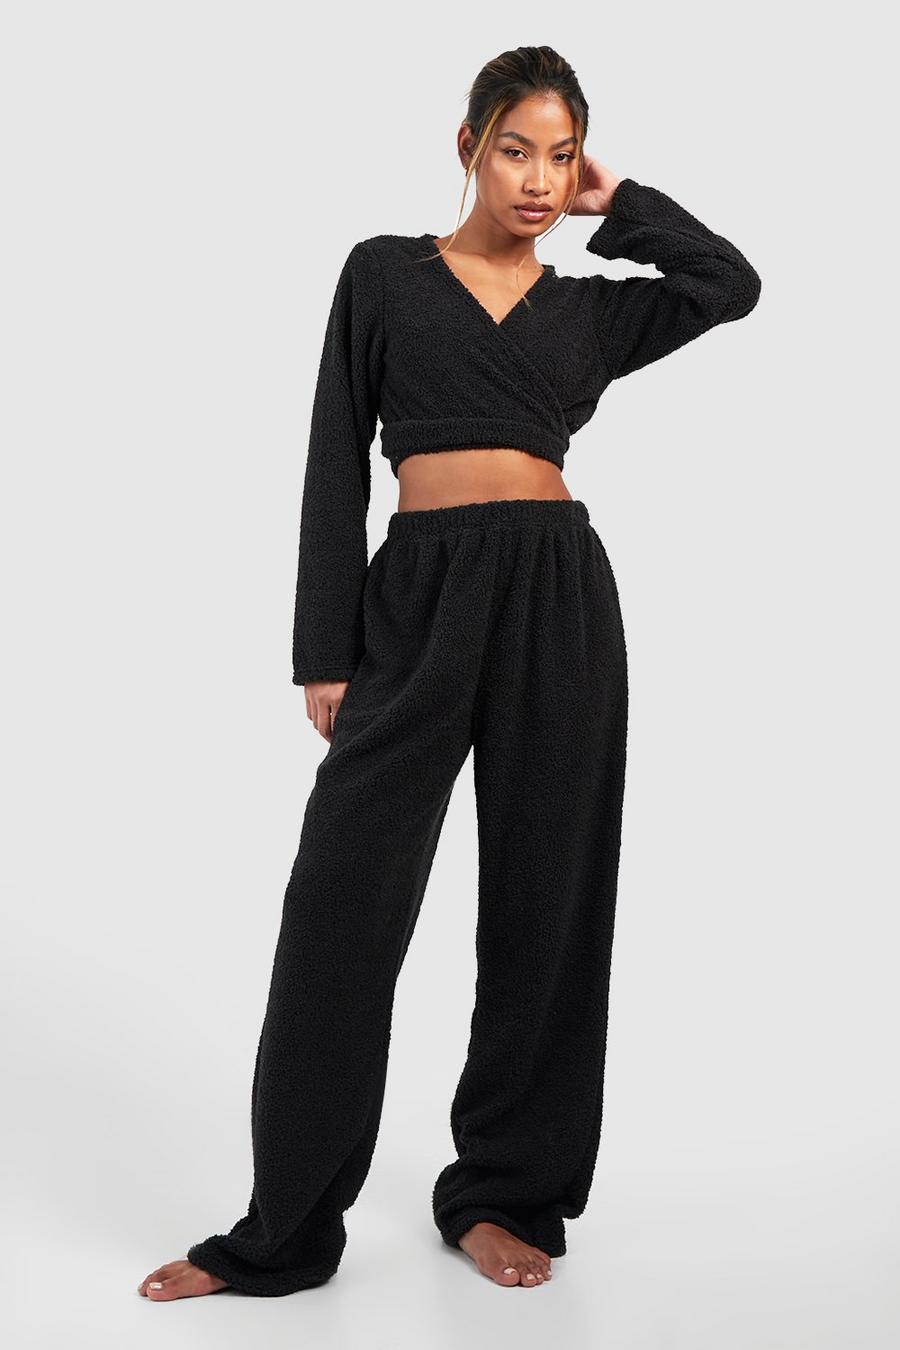 Black Hers Matching Teddy Wrap Top & Pants Loungewear Set